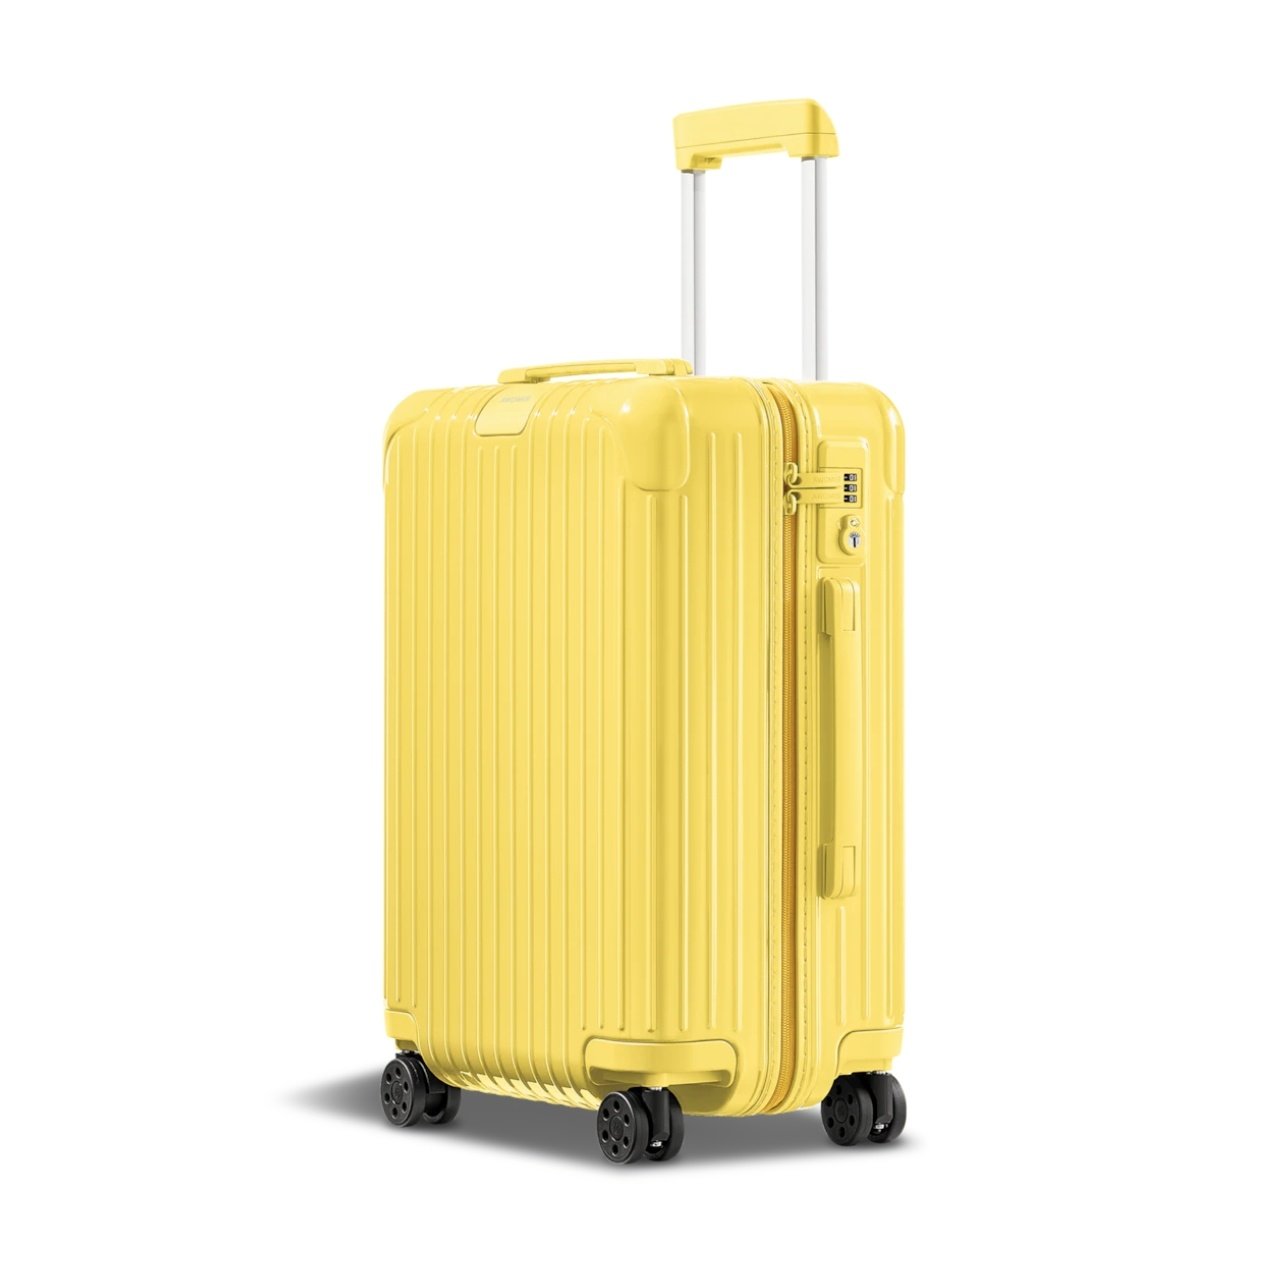 Yellow hard shell suitcase with adjustable handle